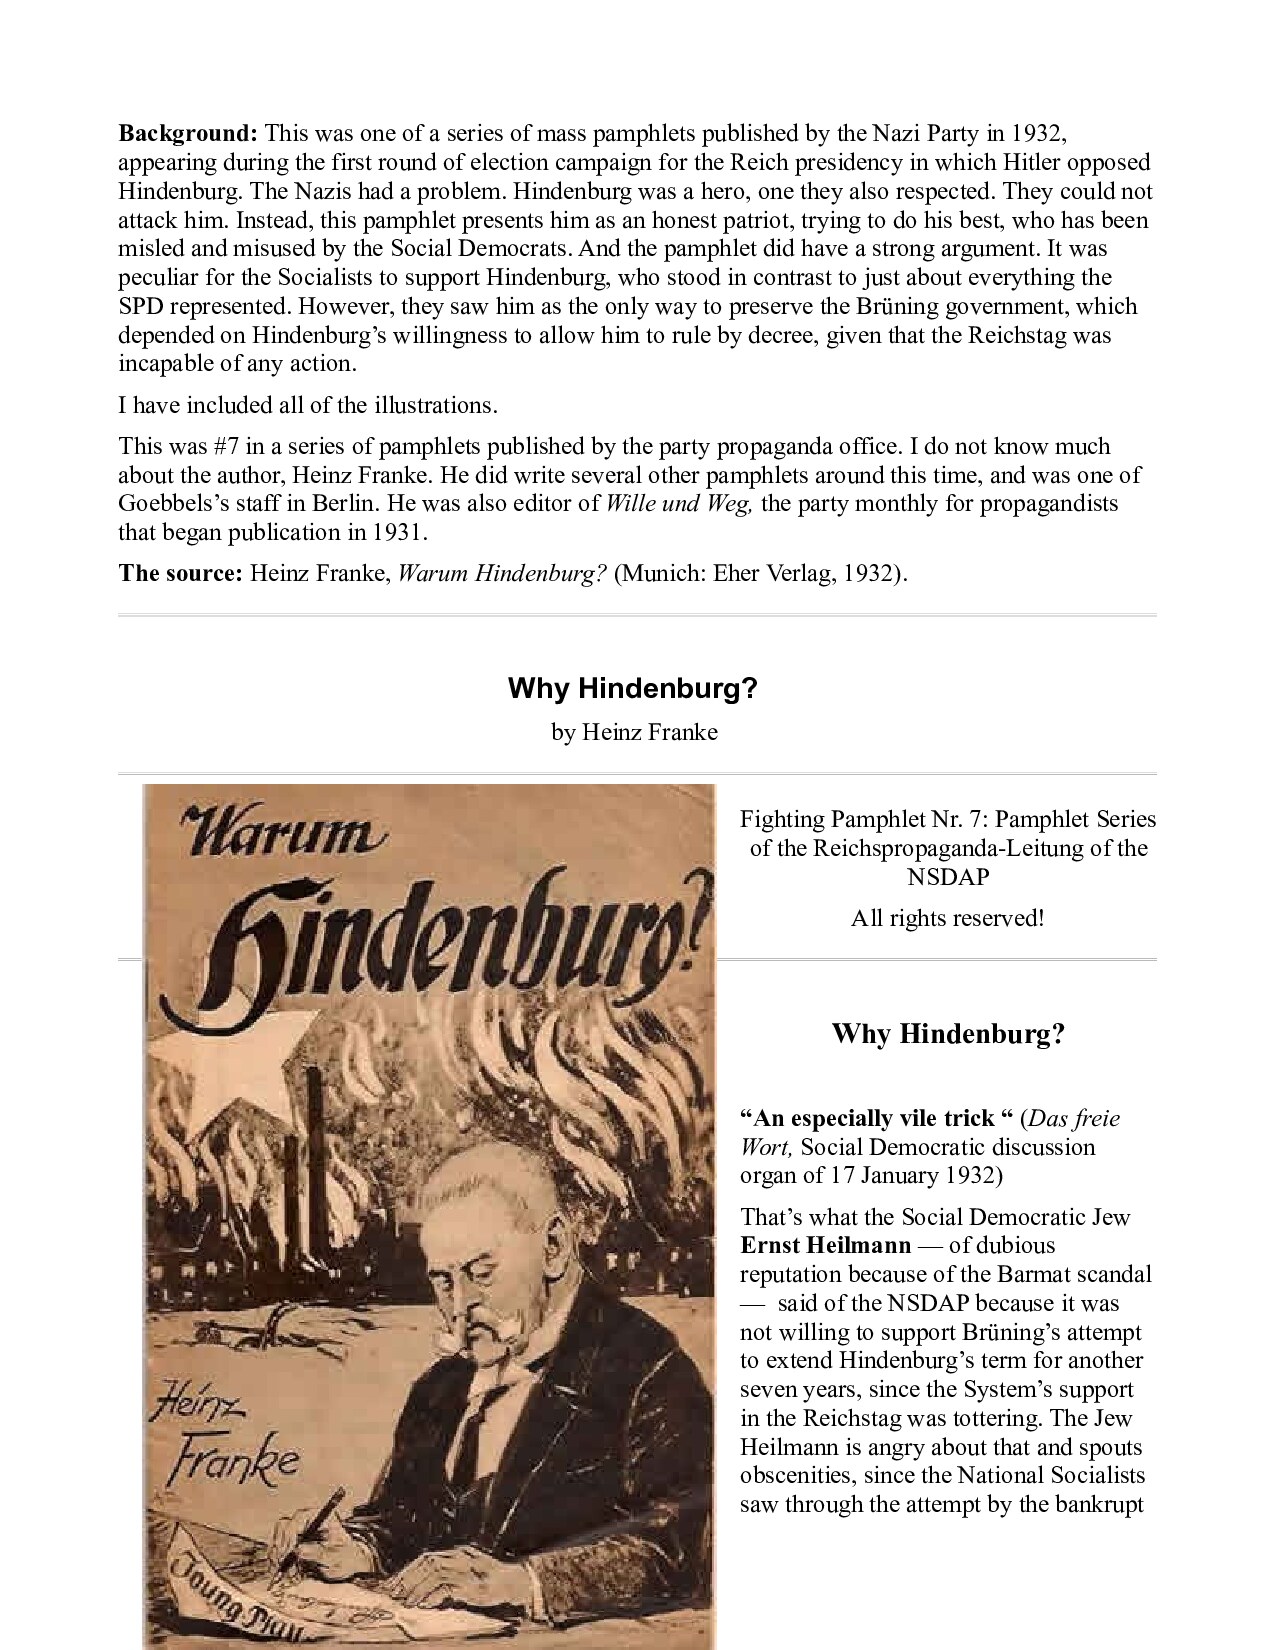 Franke, Heinz; Why Hindenburg